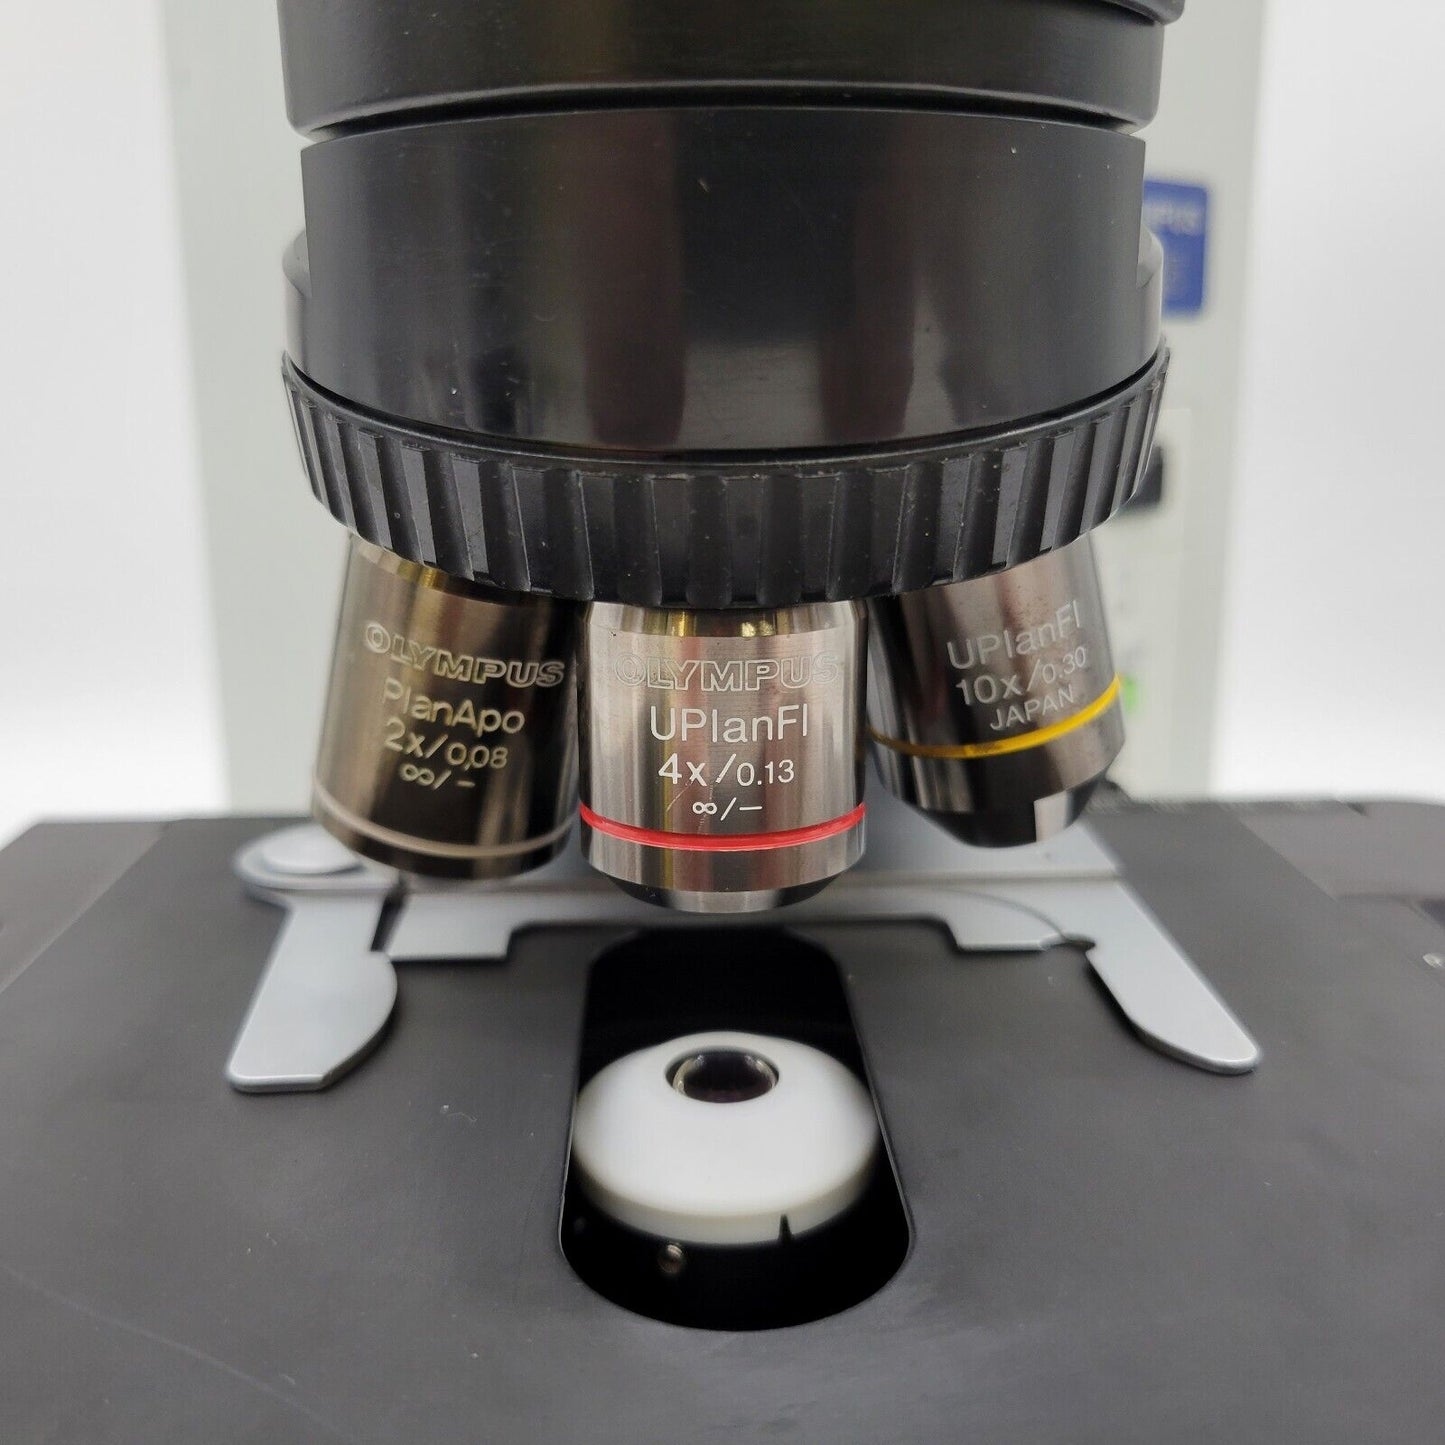 Olympus Microscope BX45 Pathology / Mohs with Fluorites & Tilting Binocular Head - microscopemarketplace